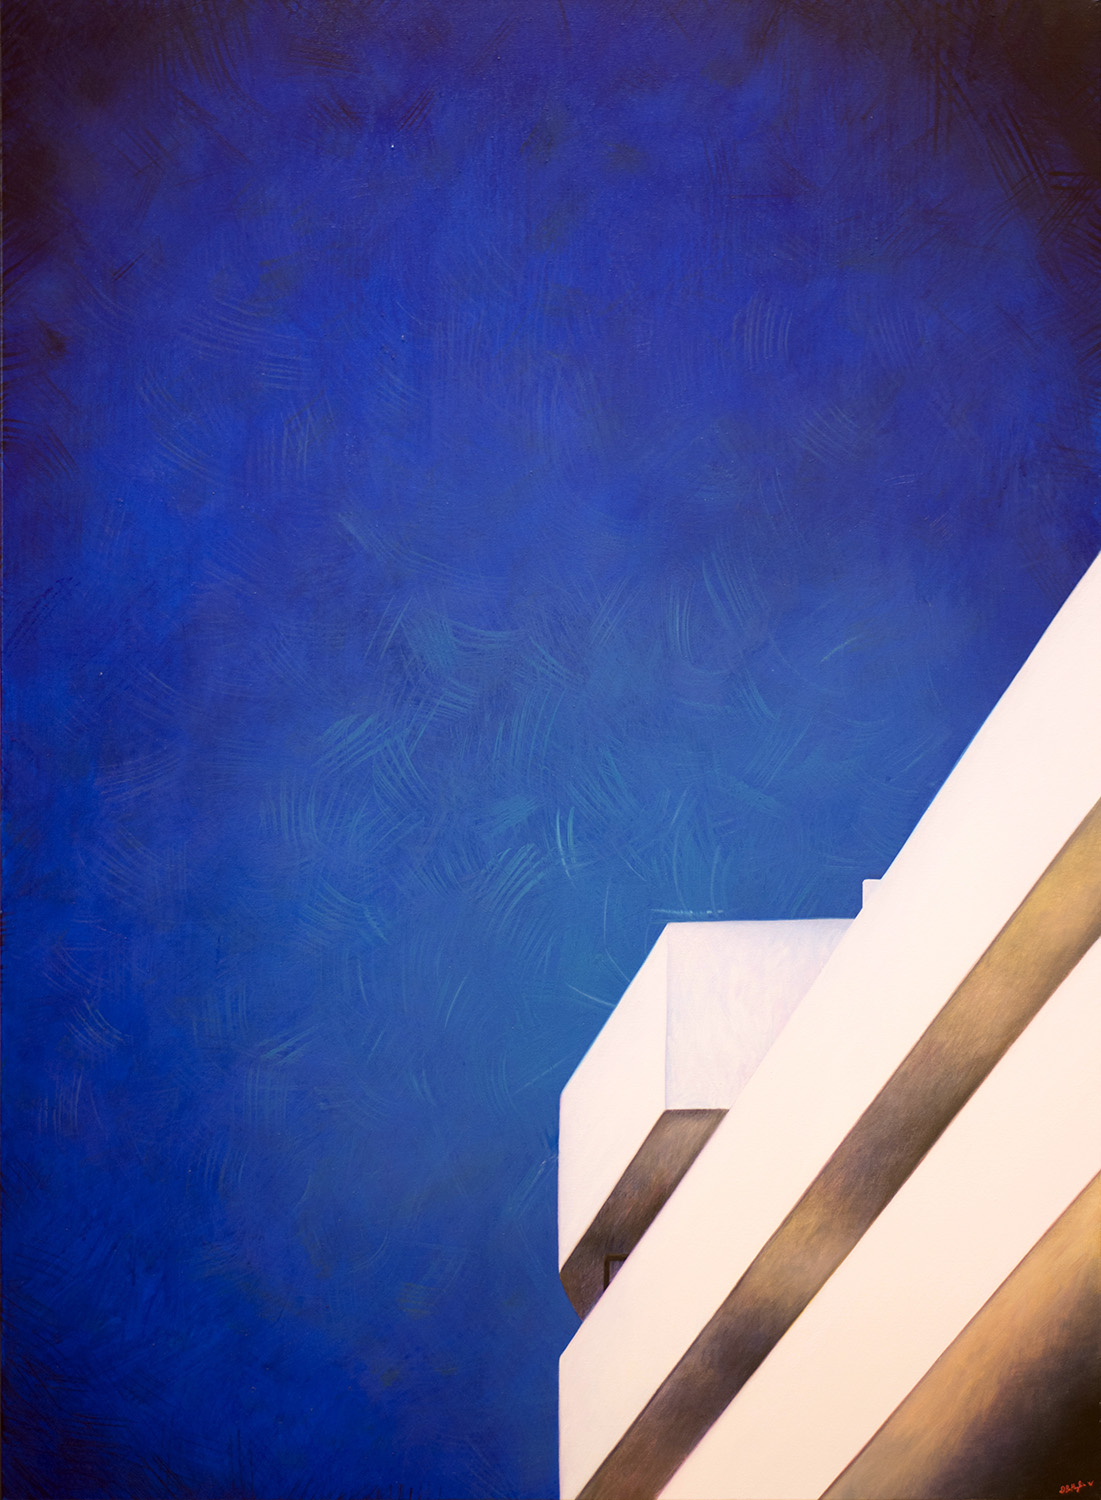 
'Blue Interlude'
(2016)
óleo sobre lienzo,
100x73 cm
